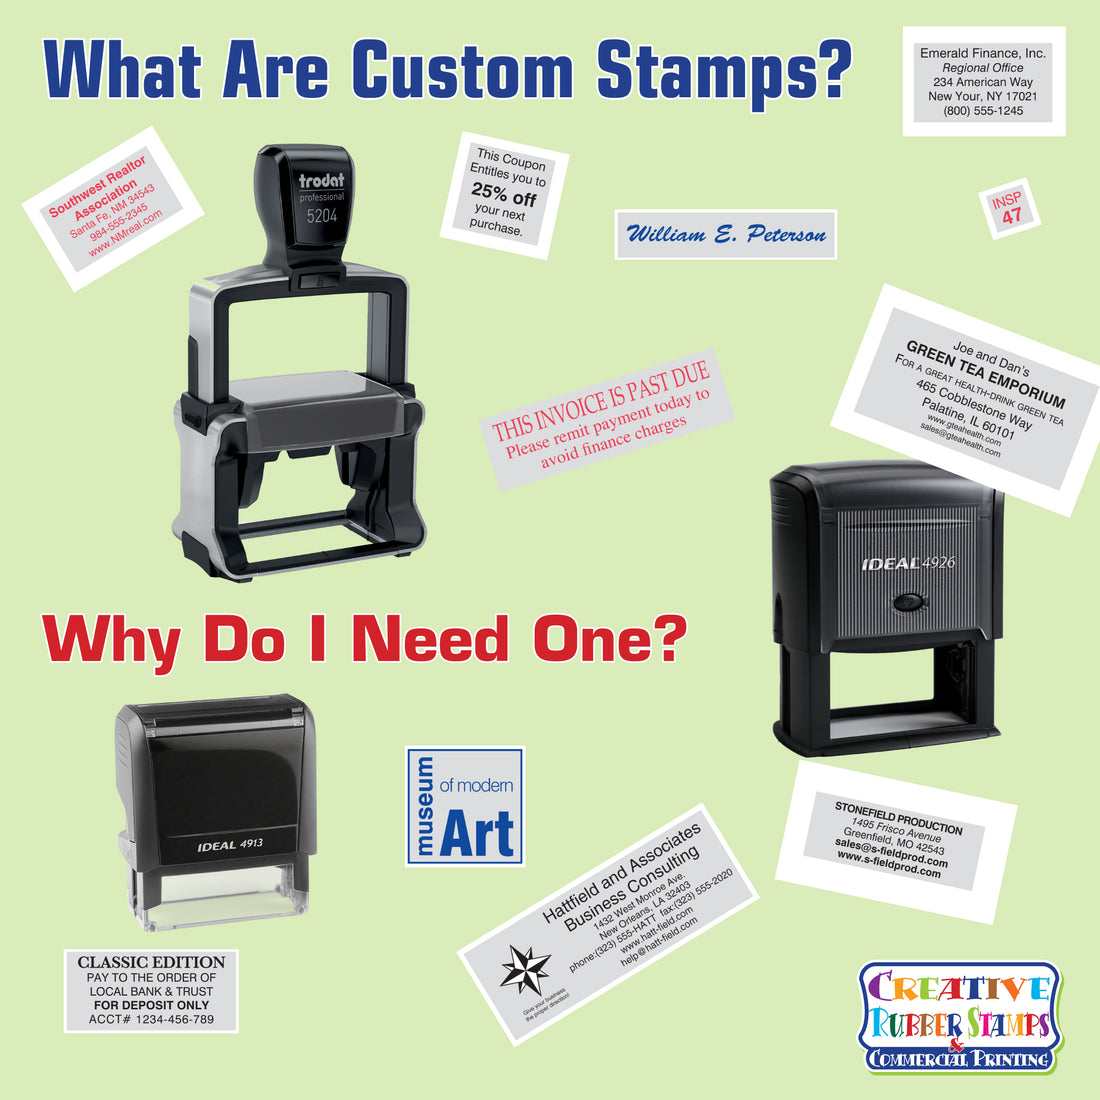 Classic Santa Return Address Stamp - Simply Stamps